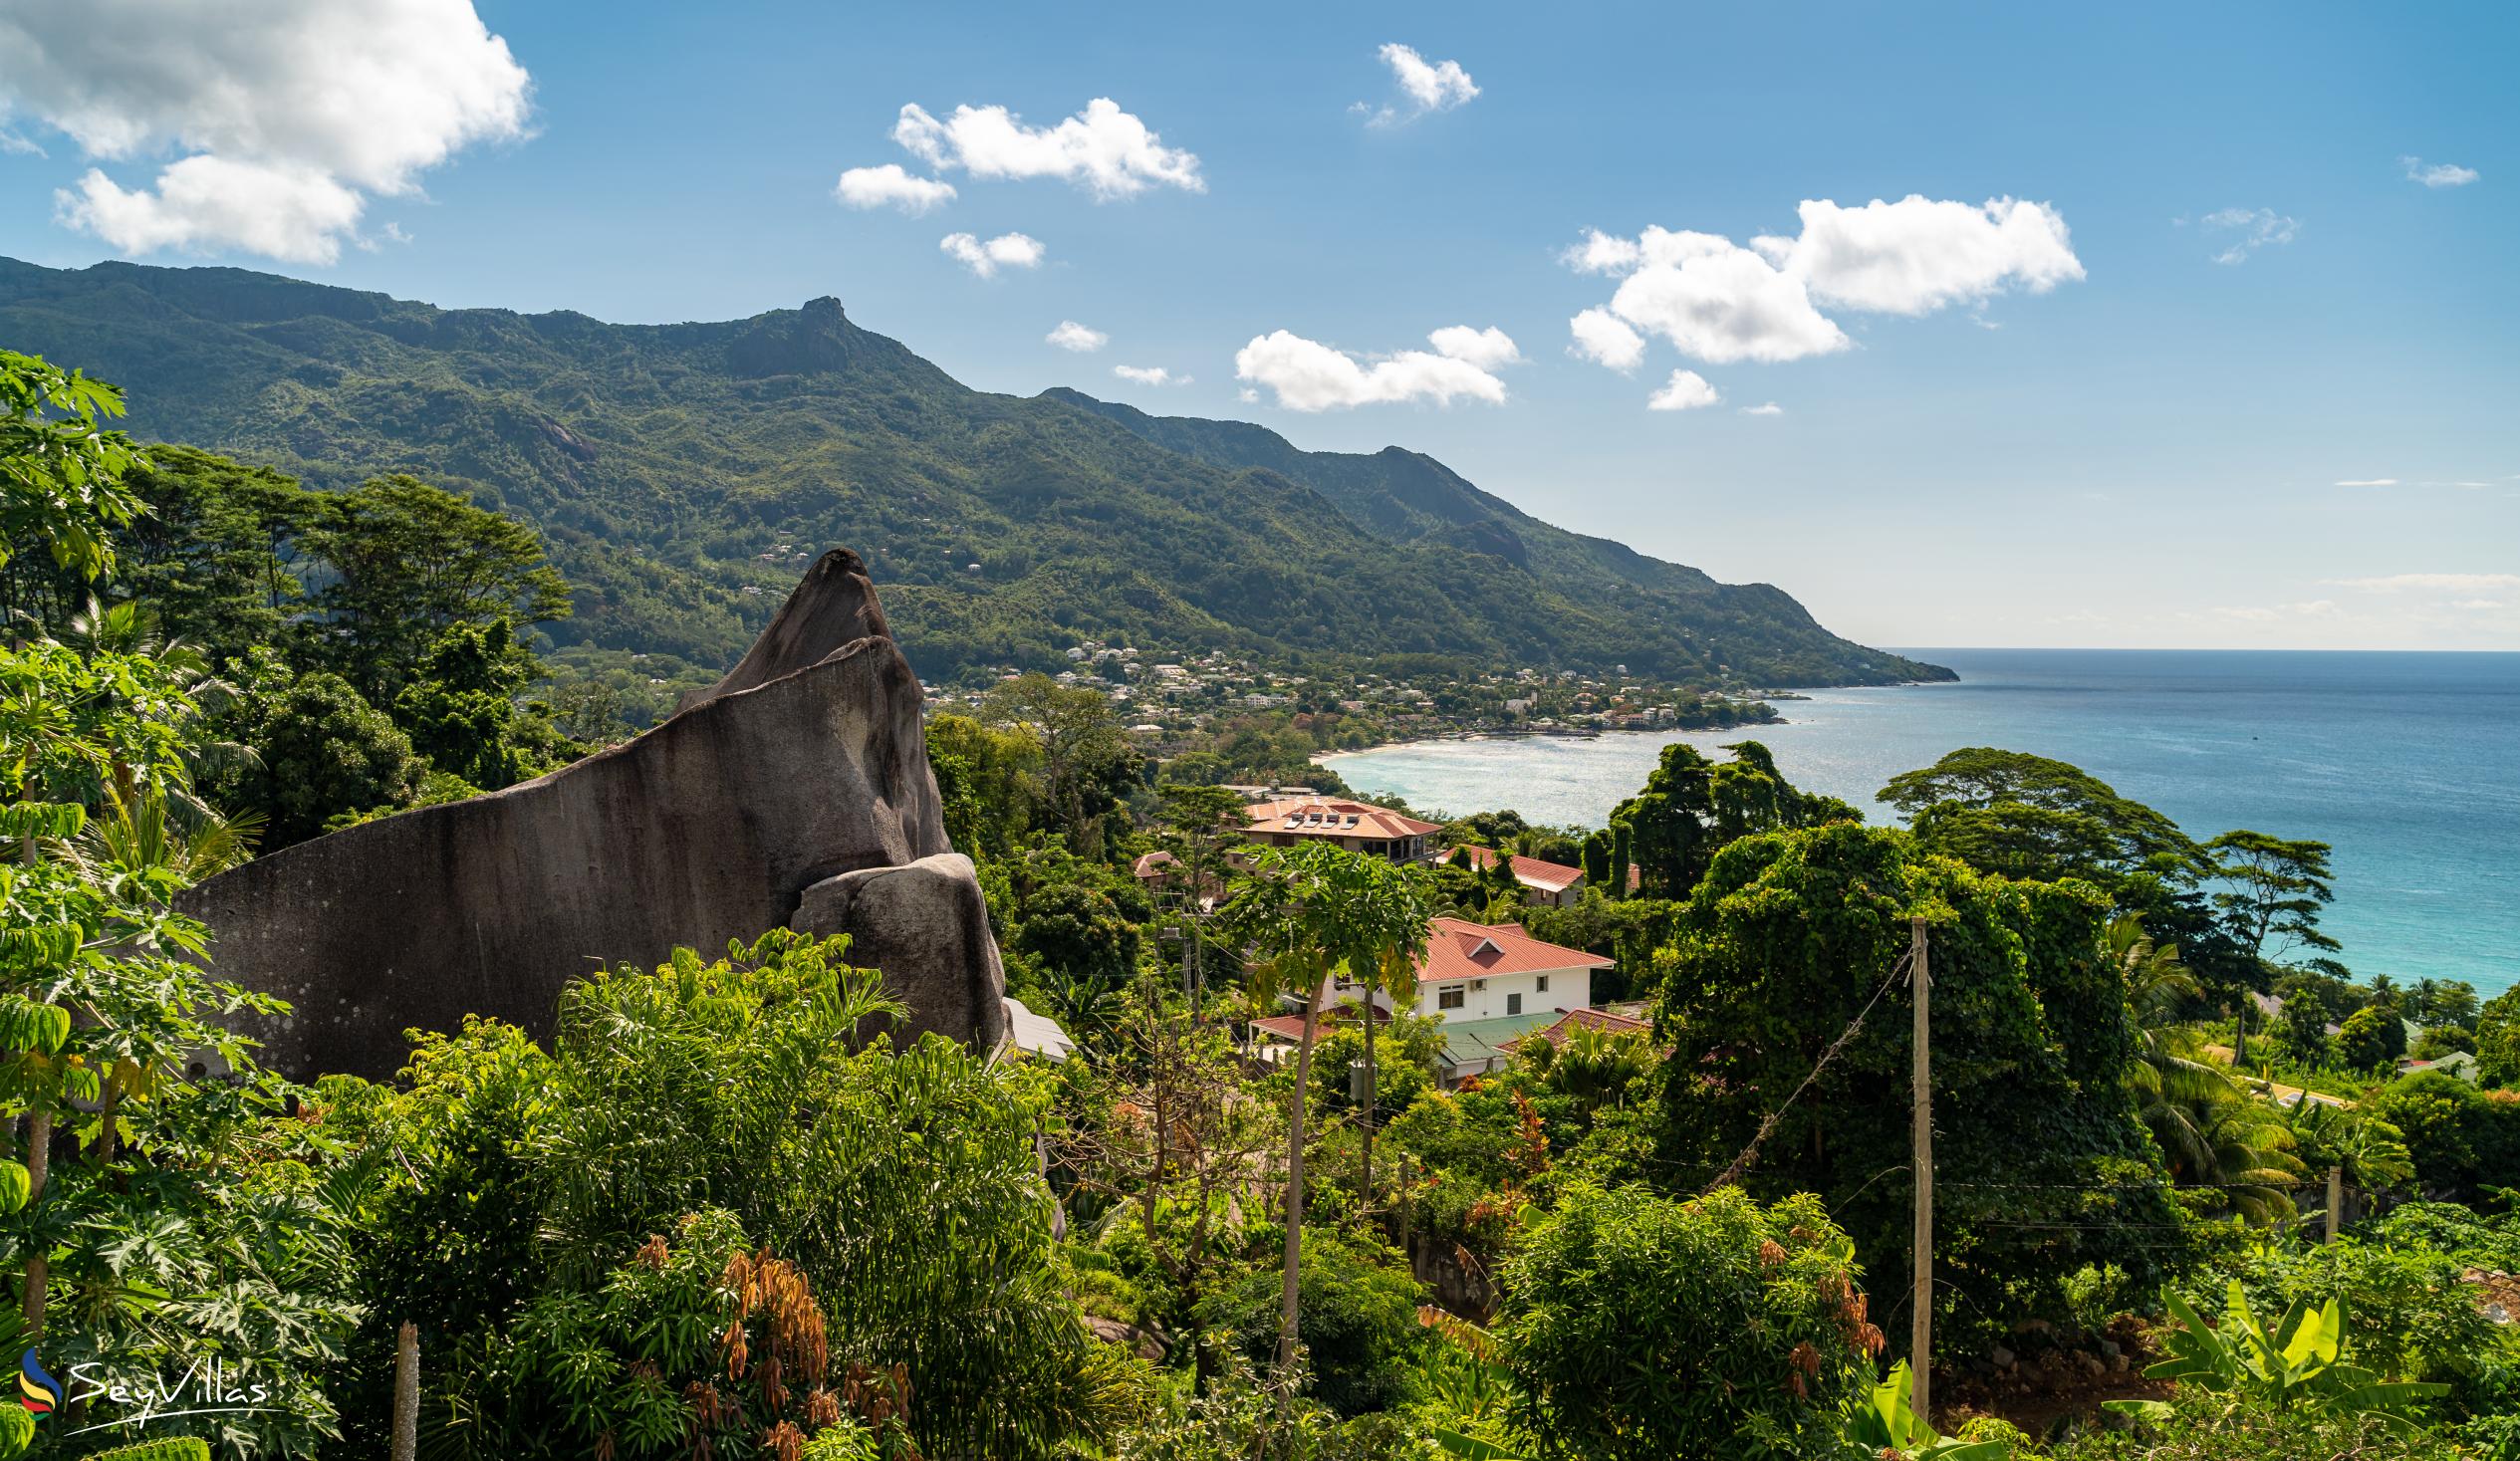 Photo 7: Jbilla Self Catering - Outdoor area - Mahé (Seychelles)